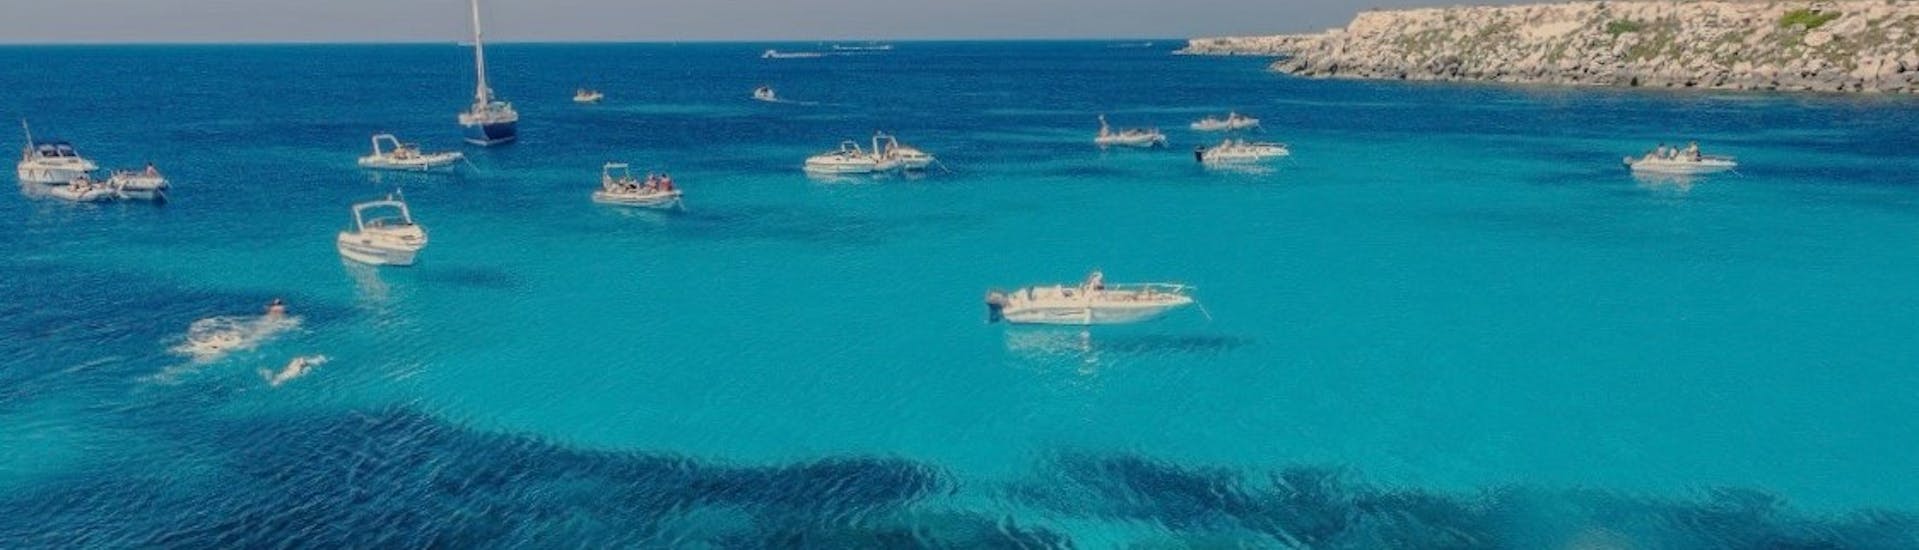 Alquiler de barco - Islas Egadas, Riserva naturale dello Zingaro & Castellammare del Golfo.